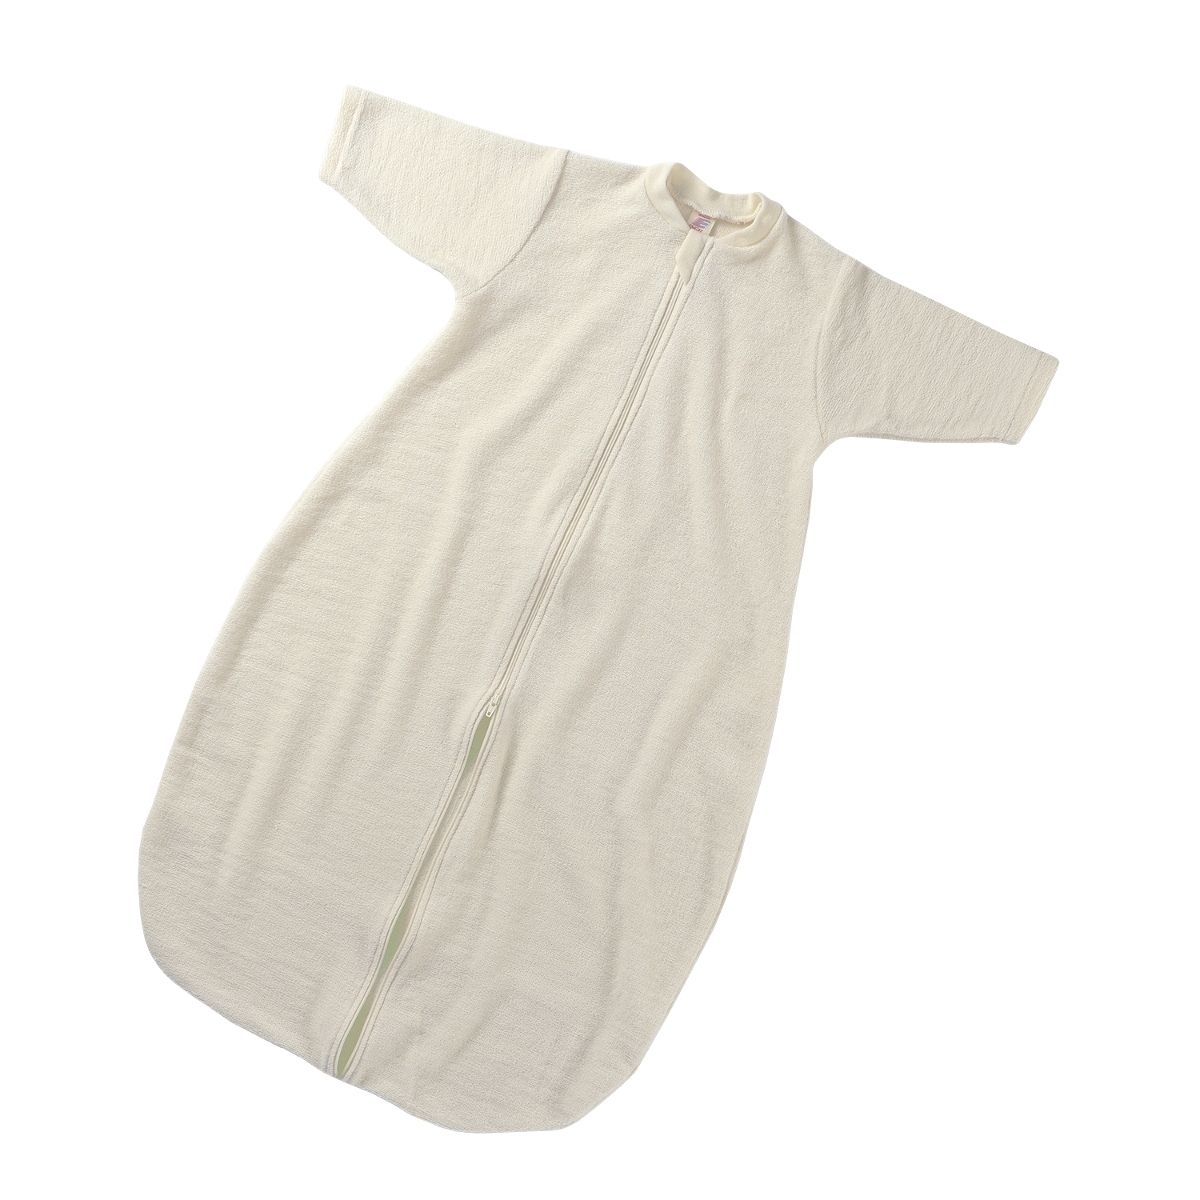 ENGEL Natur Baby sleeping-bag with zipper Natural 506010-01 